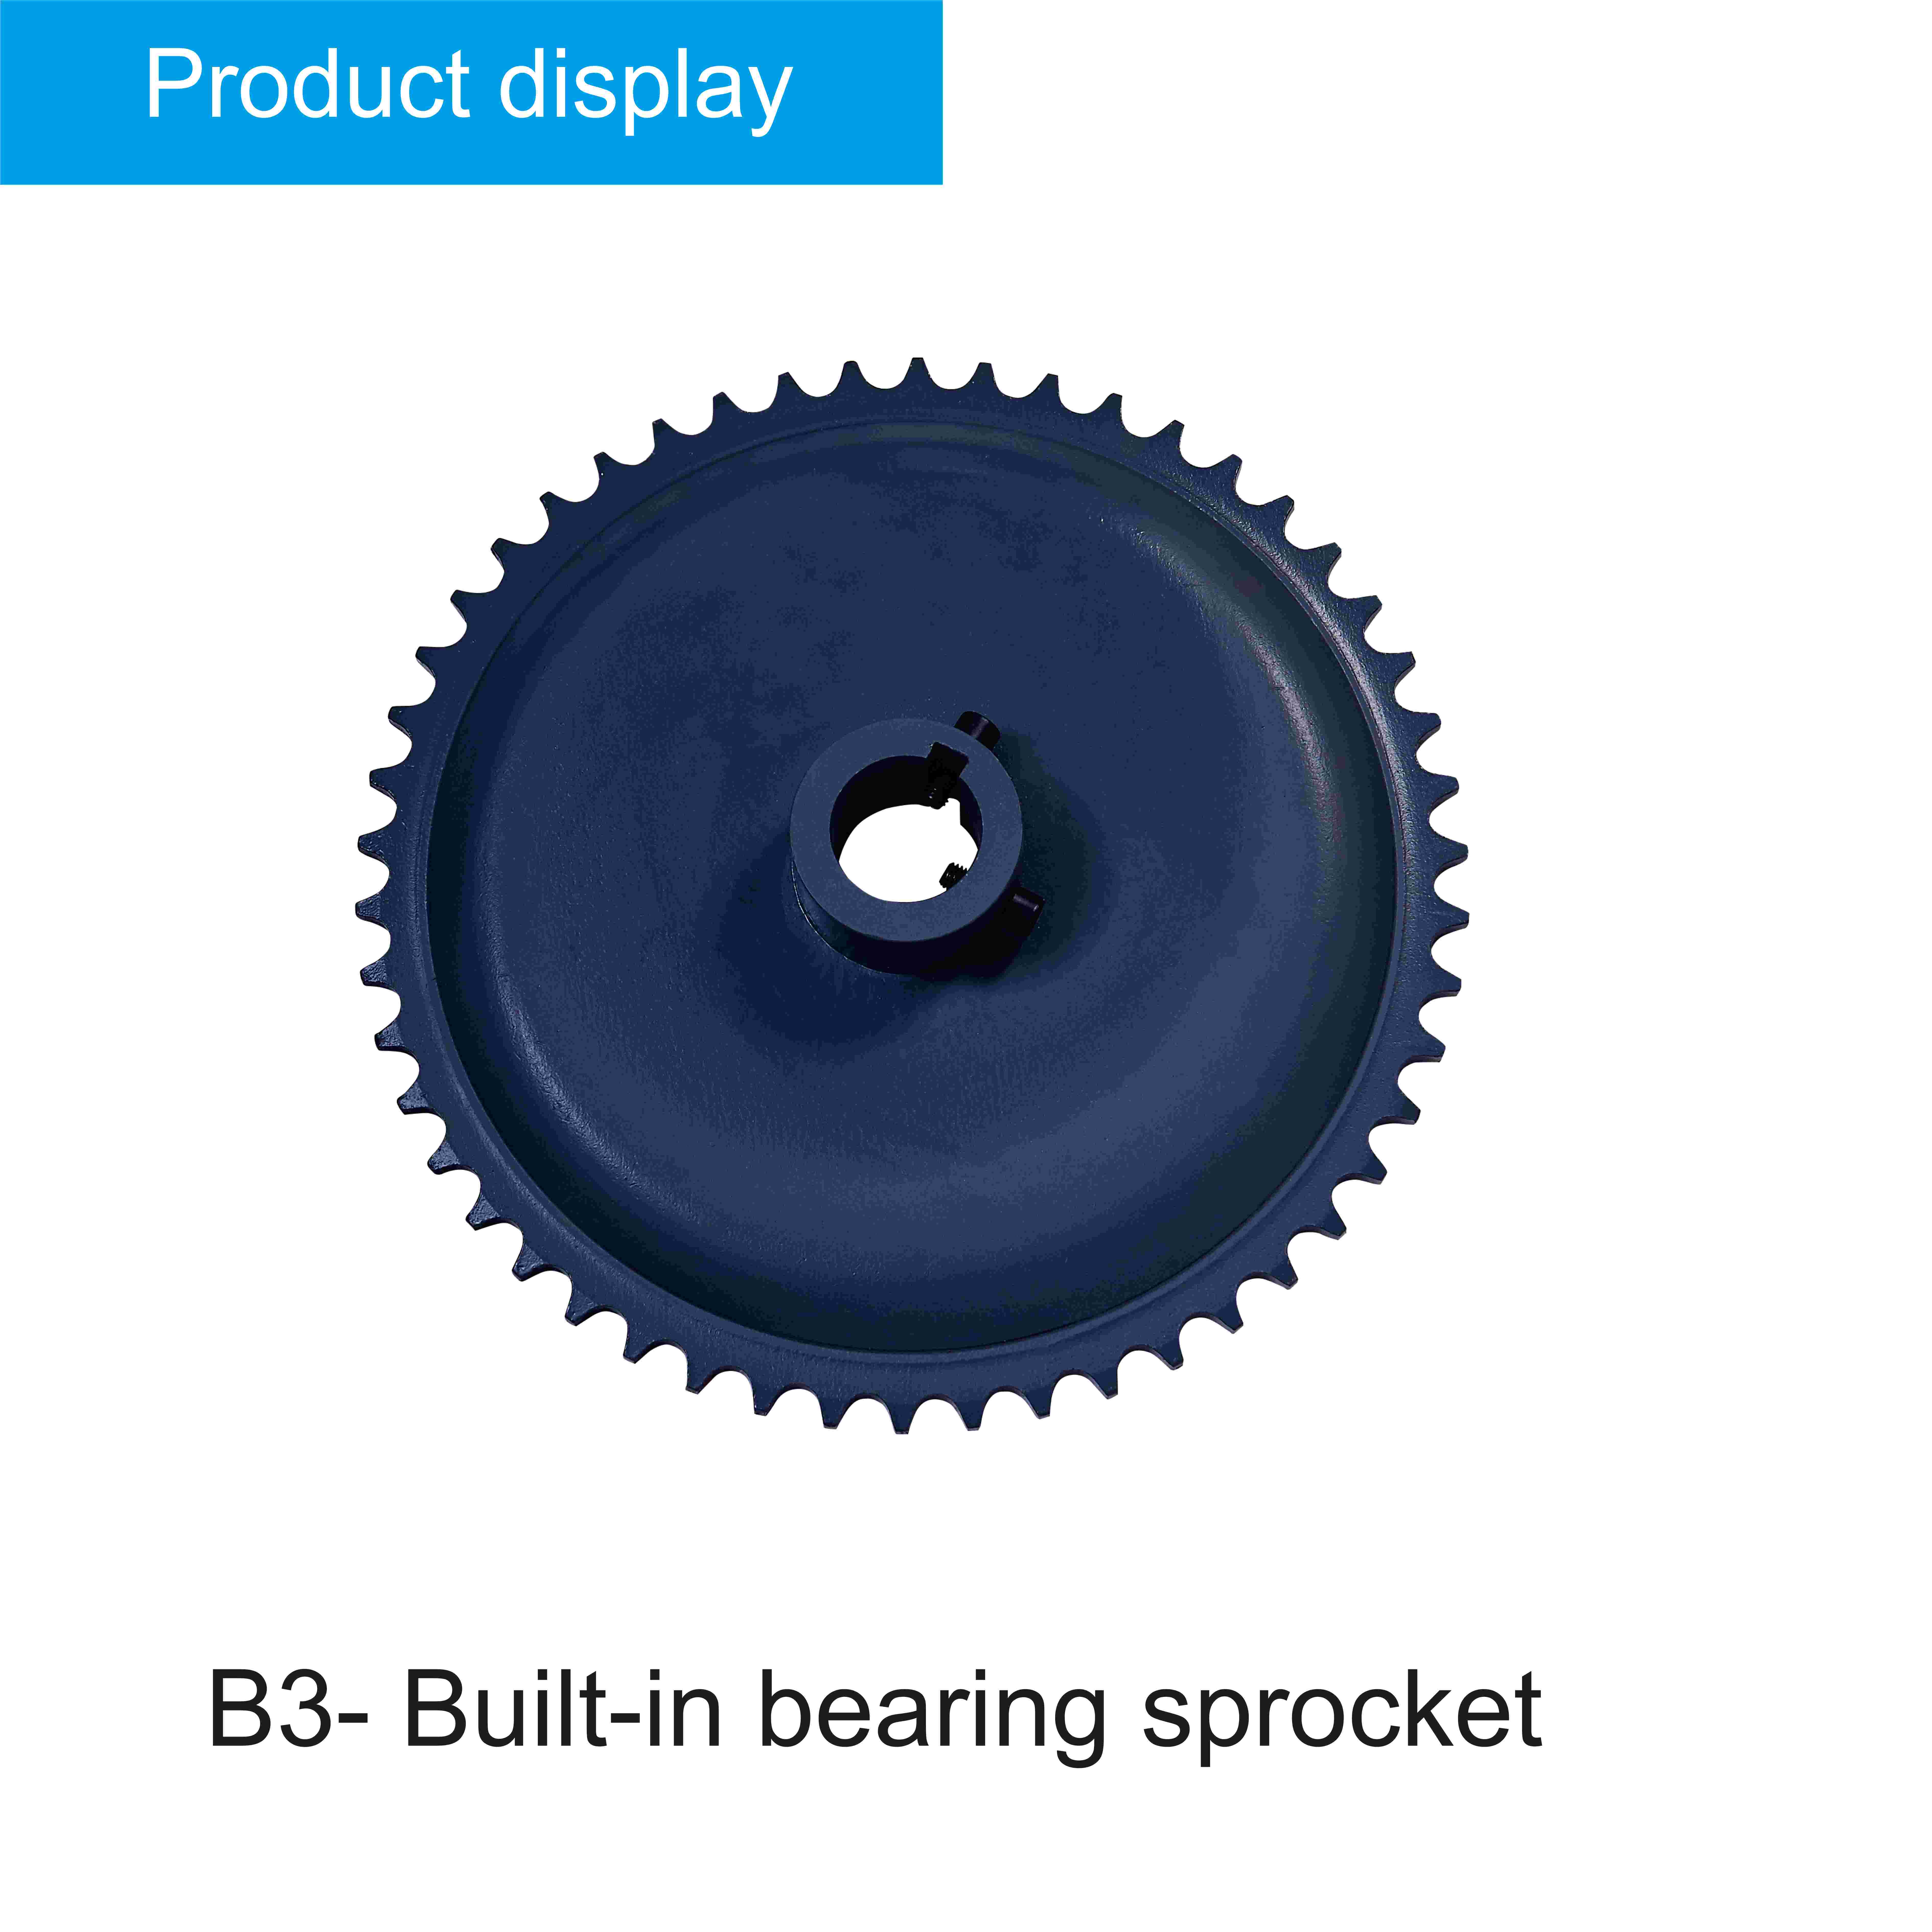 B3 သည် bearing sprocket-1 တွင်တည်ဆောက်ထားသည်။